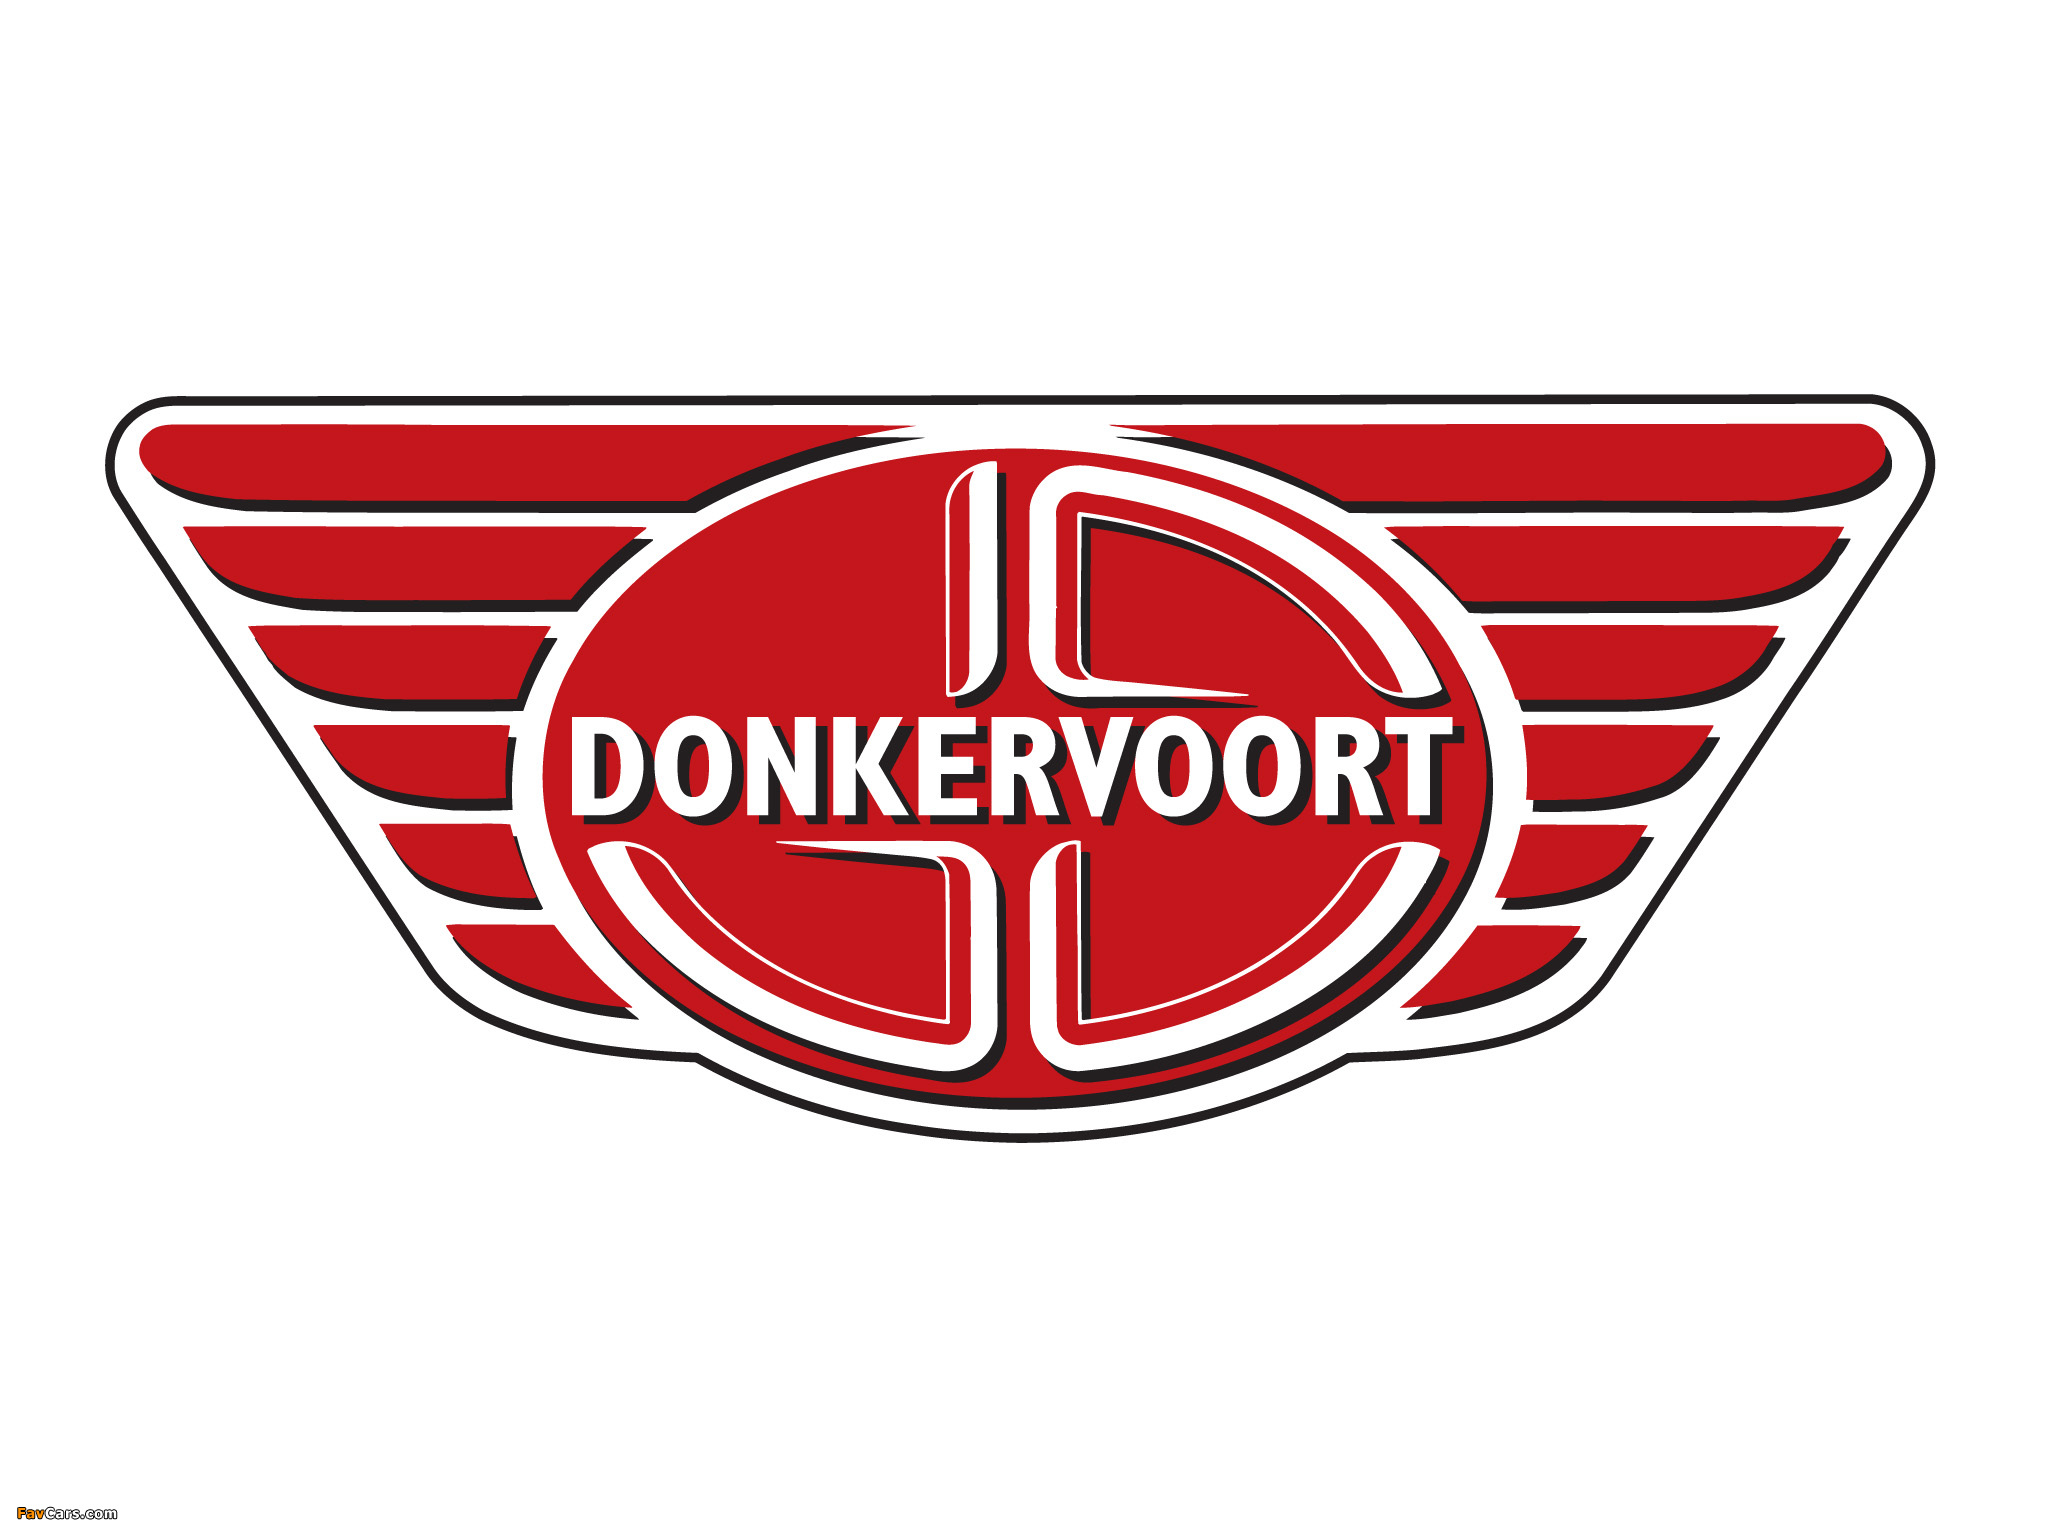 Donkervoort photos (2048 x 1536)